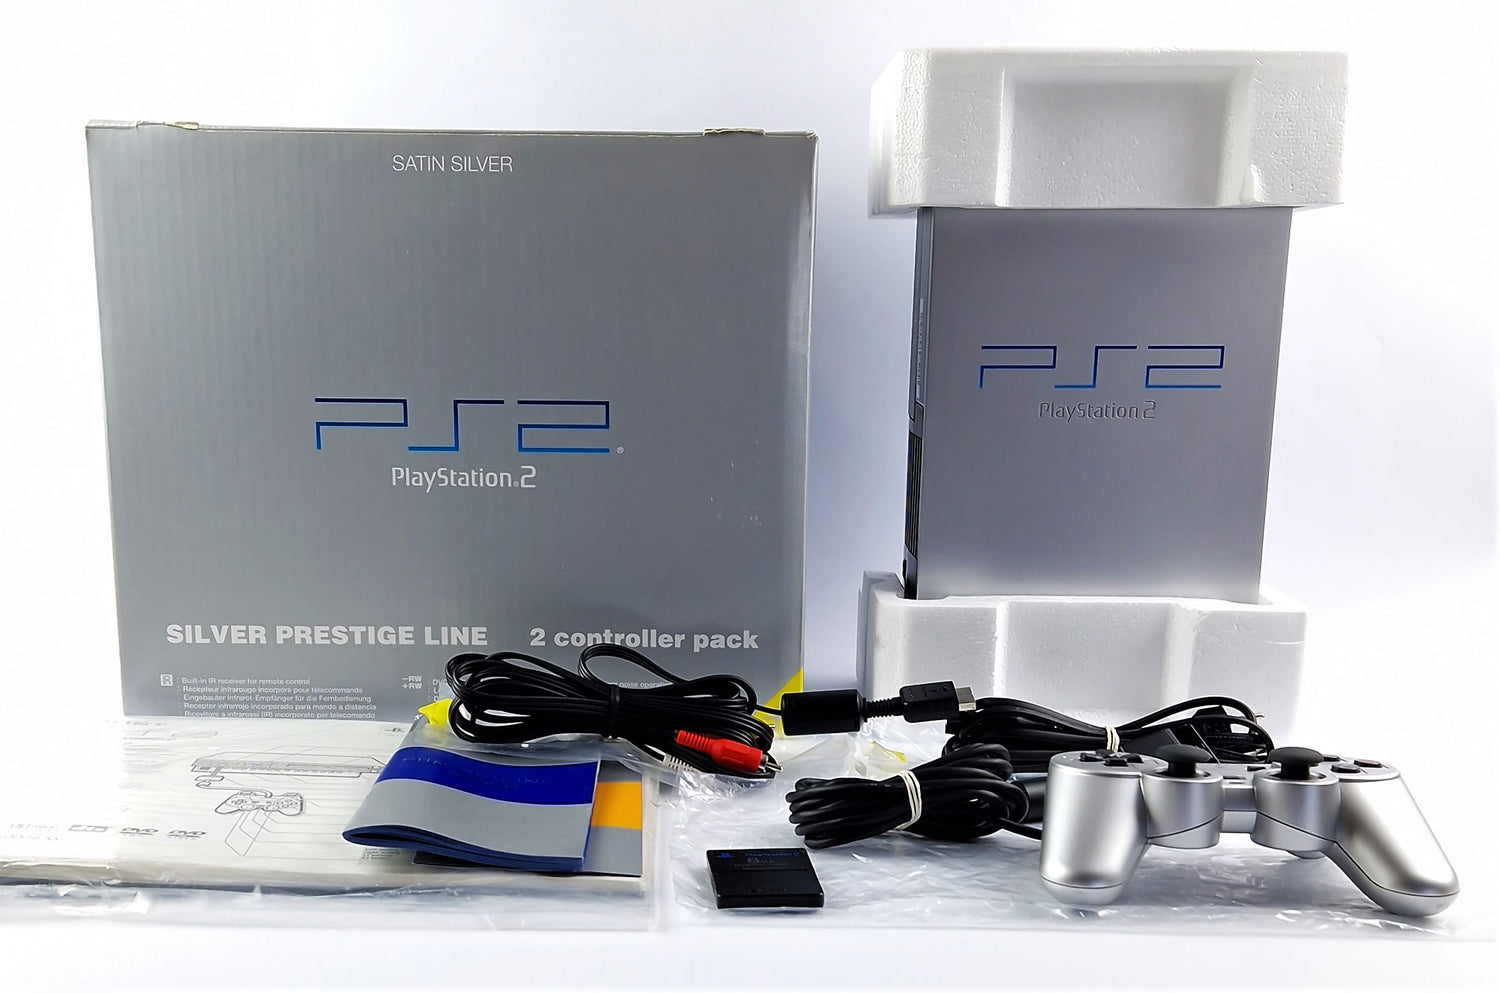 Playstation 2 Konsole : Sony PS2 Console Silber / Silver Prestige Line OVP PAL